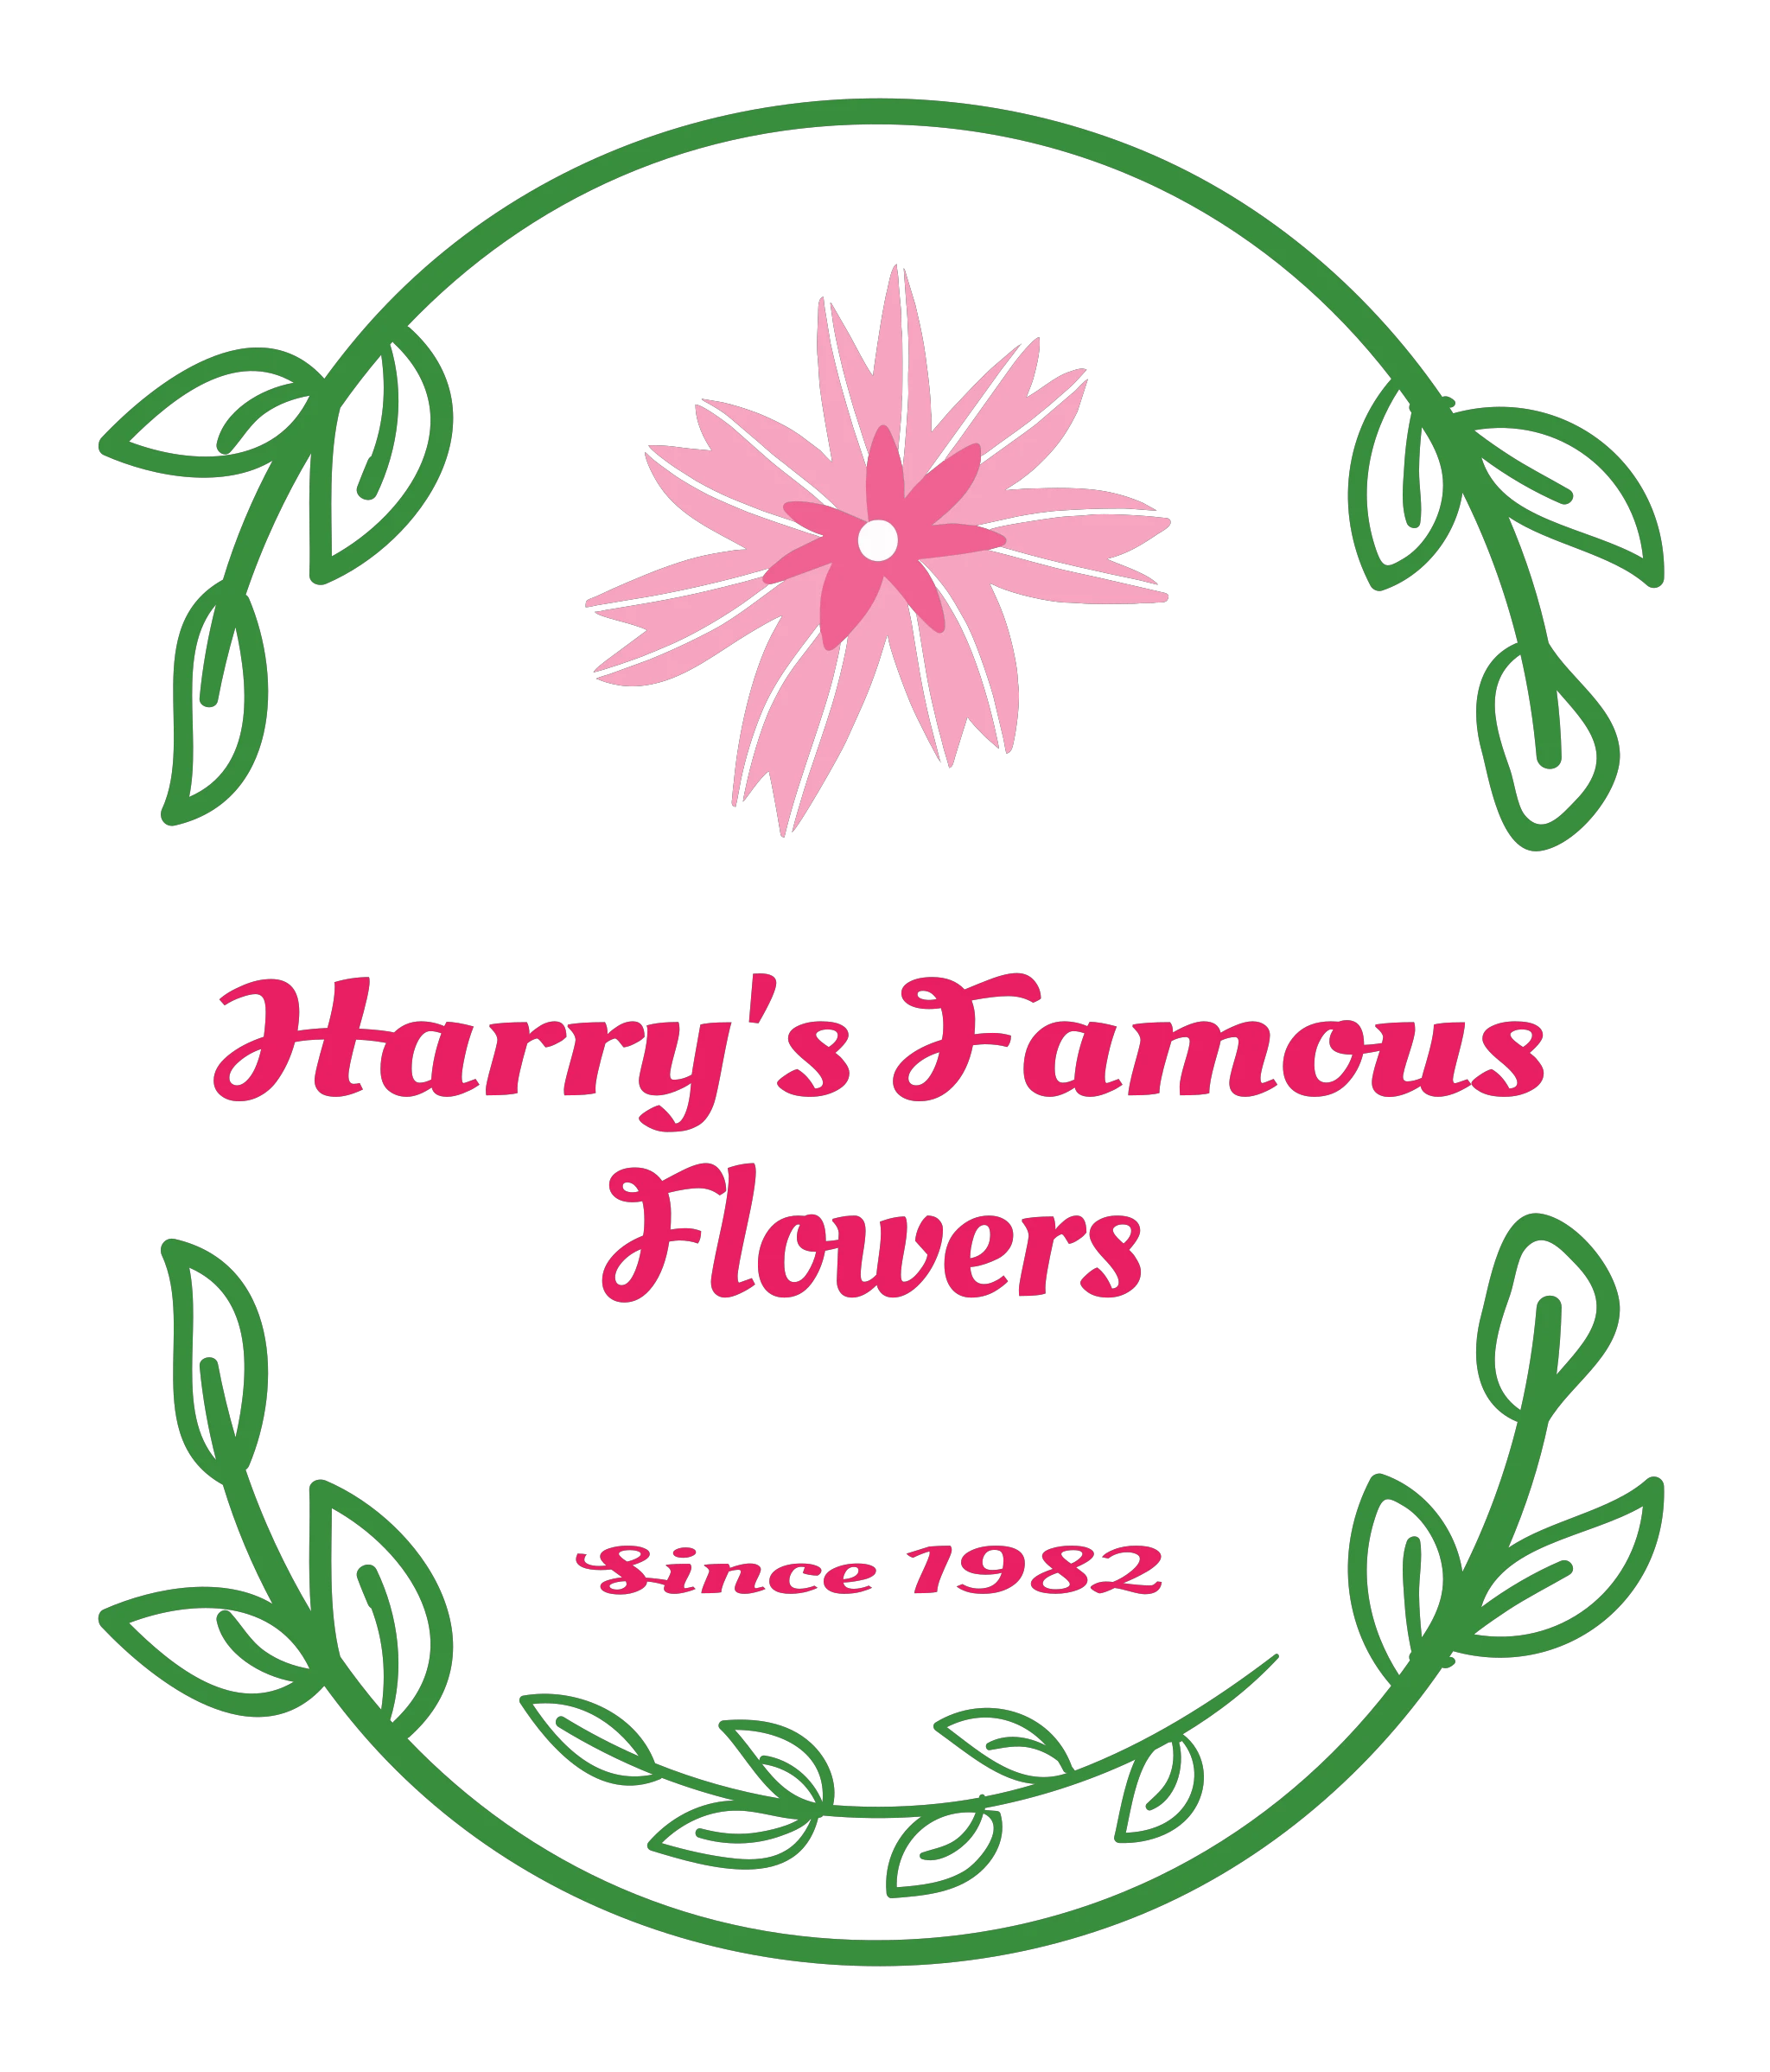 Harry's Famous Flowers